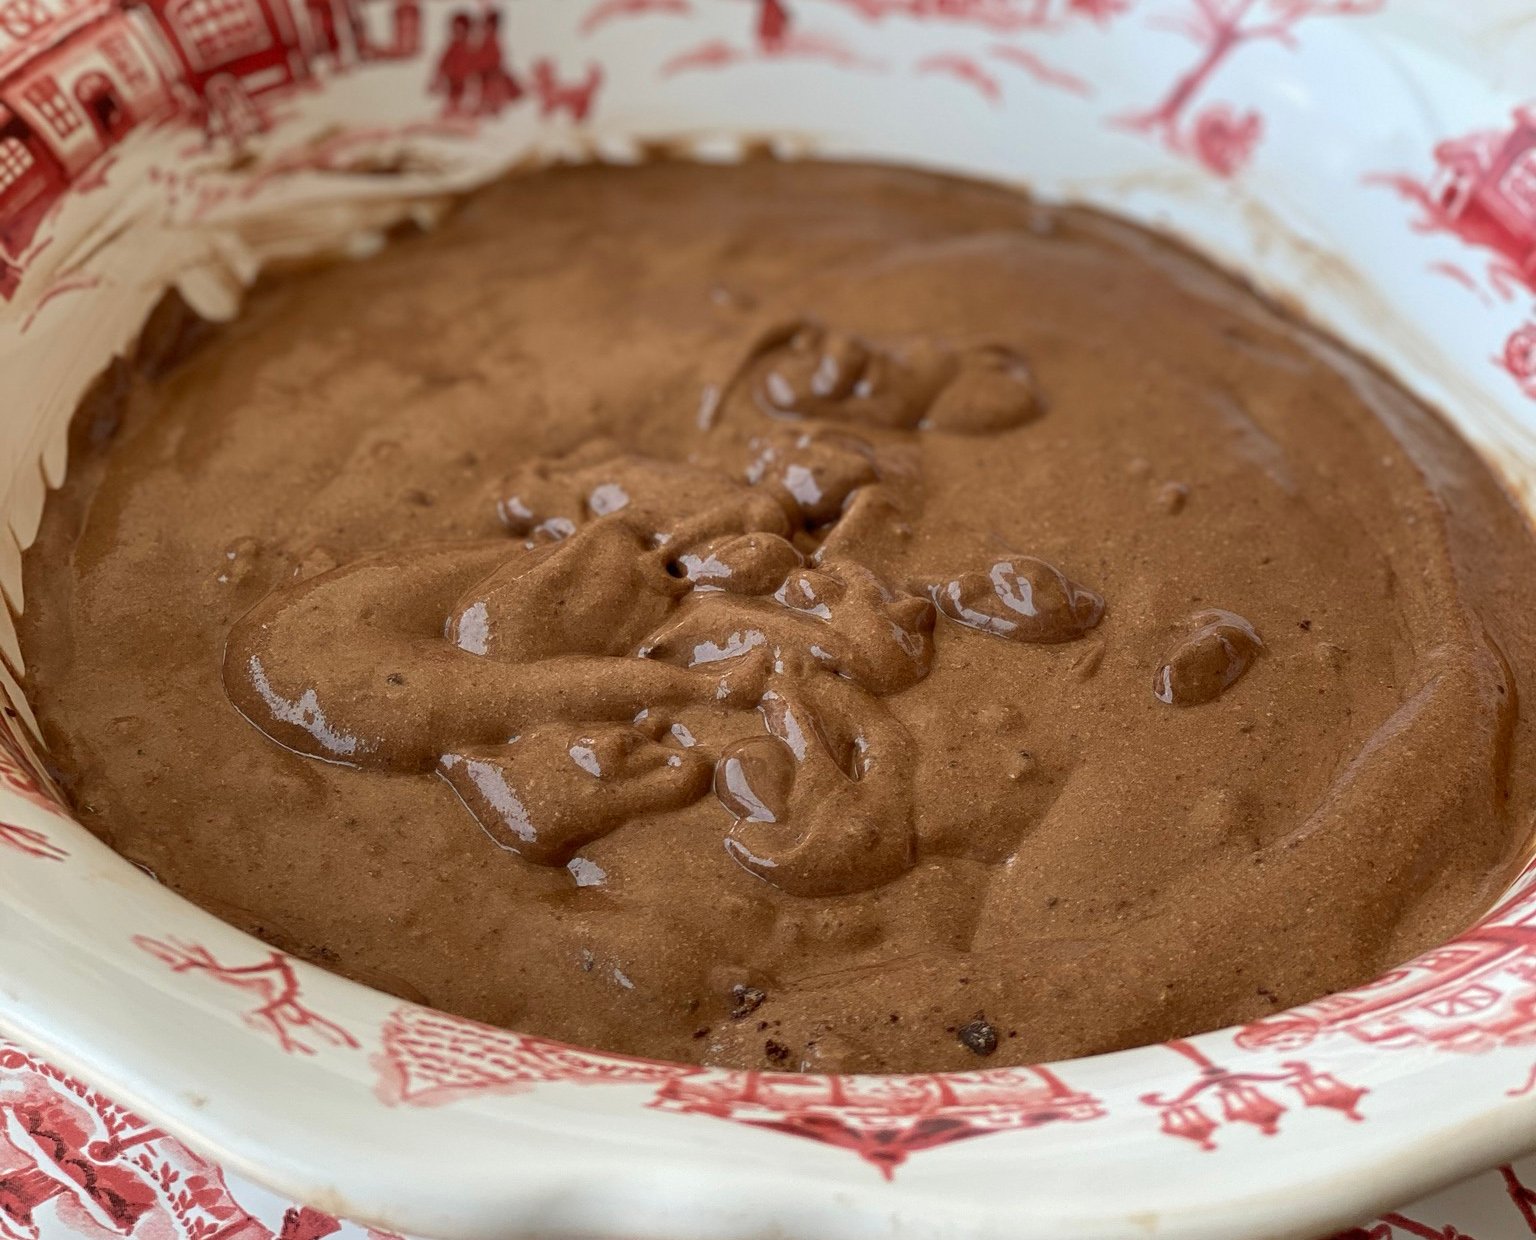 Chocolate mousse recipe